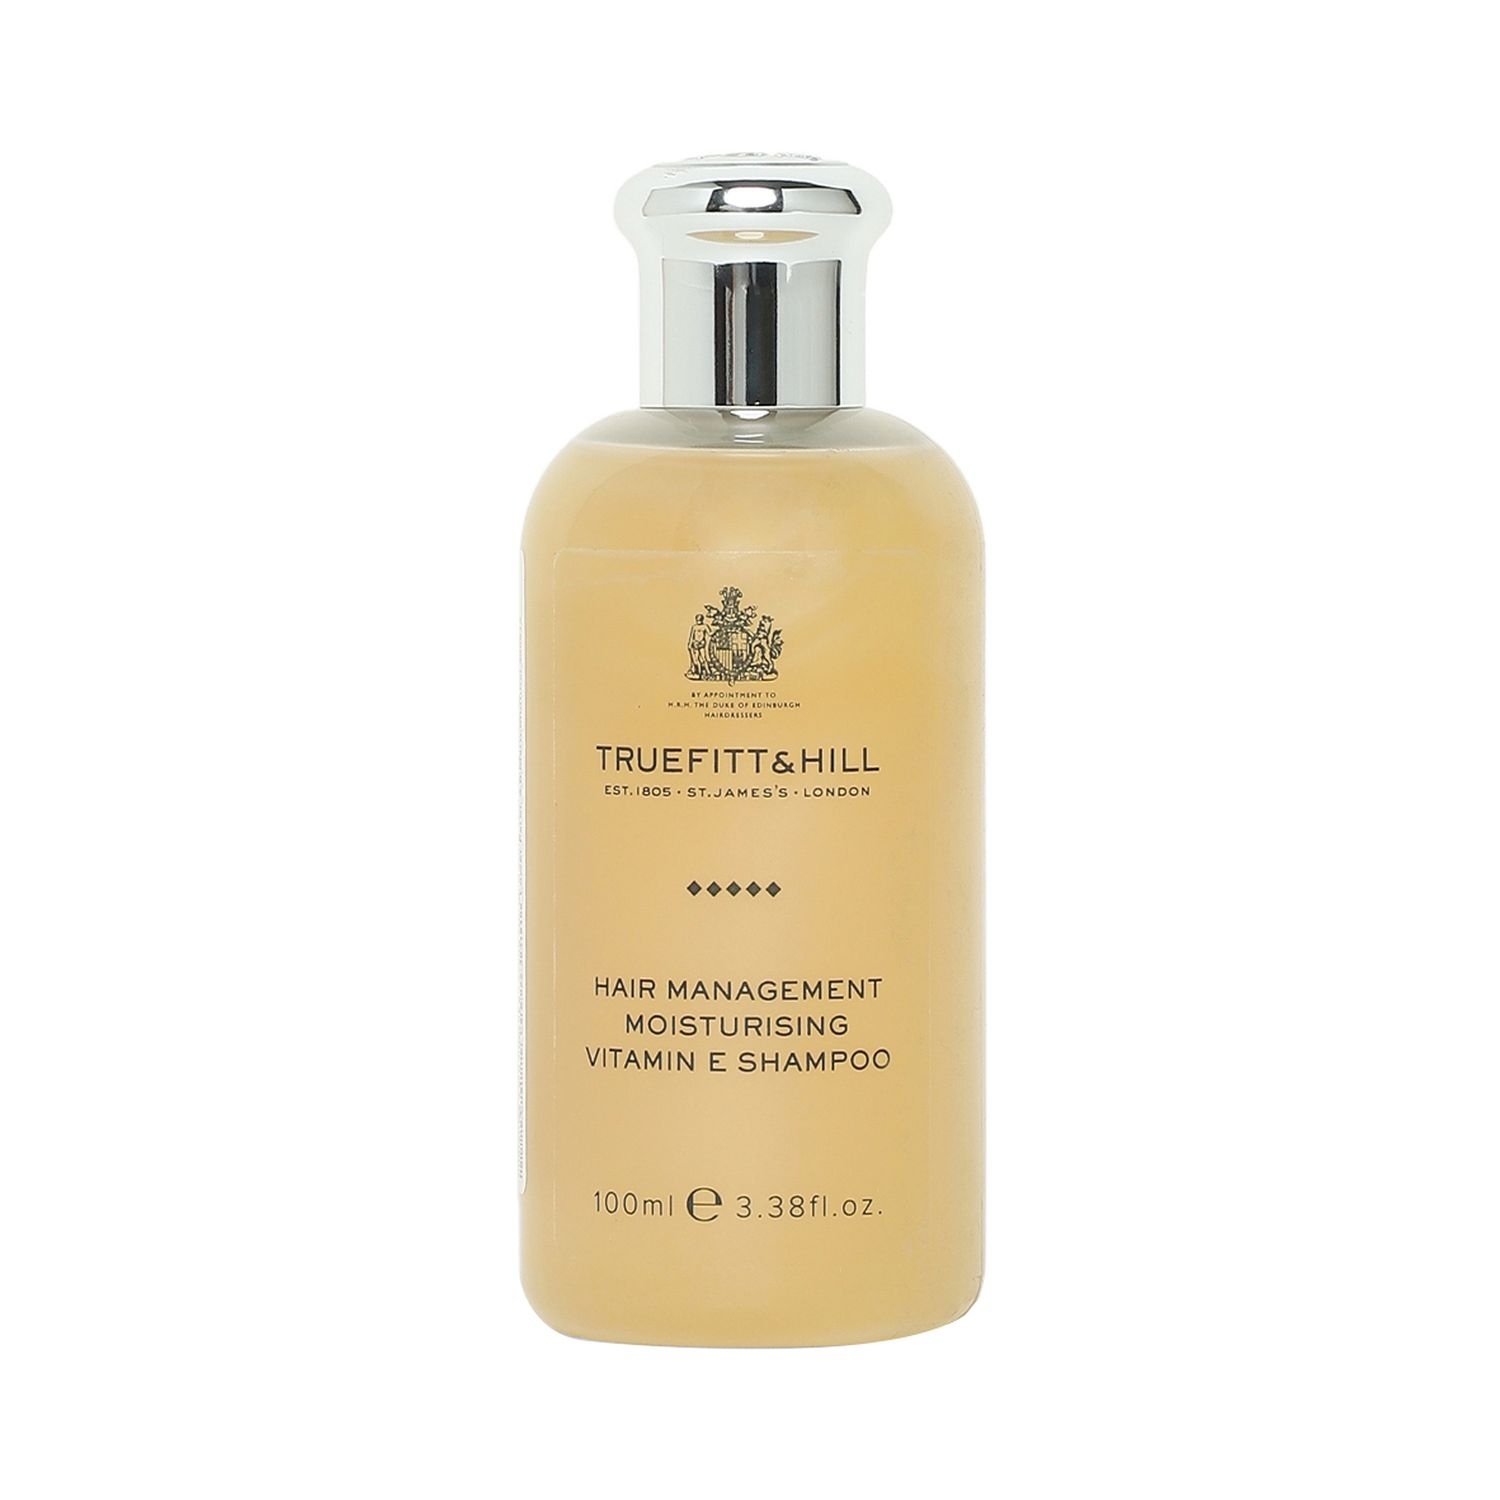 Truefitt & Hill | Truefitt & Hill Hair Management Moisturising Vitamin E Shampoo (100ml)